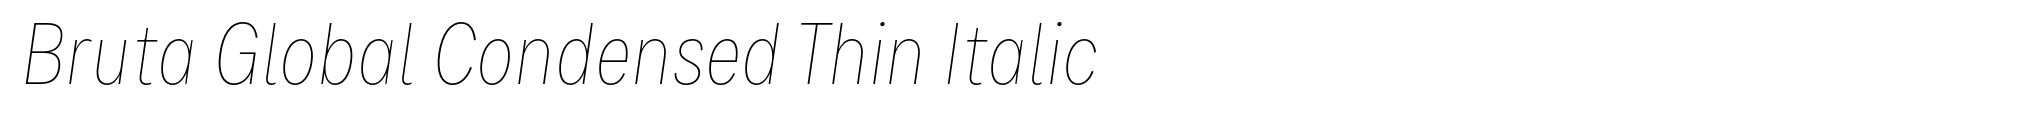 Bruta Global Condensed Thin Italic image